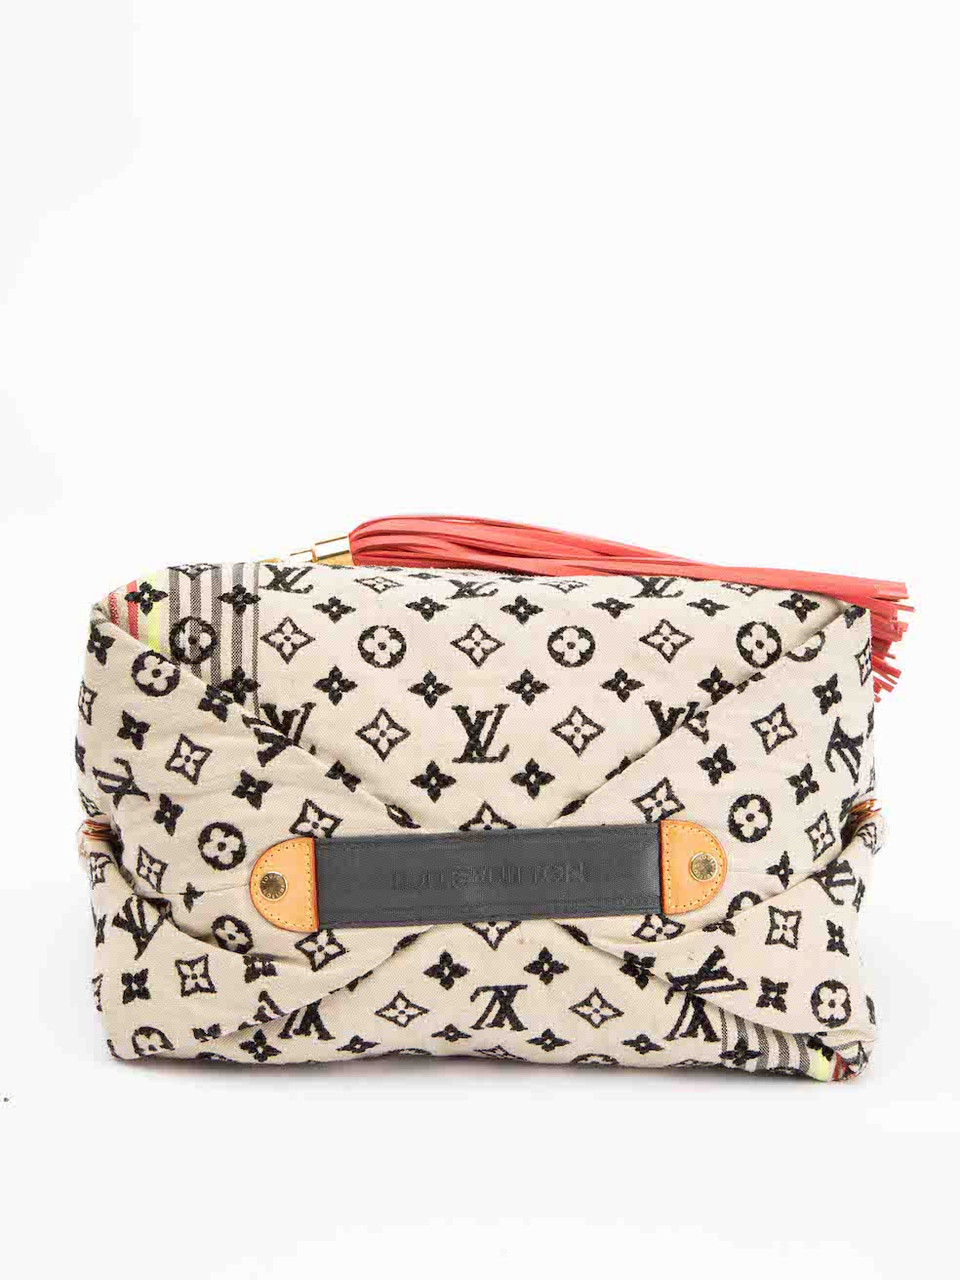 Louis Vuitton Limited Edition 2010 Cheche Bohemian Bag